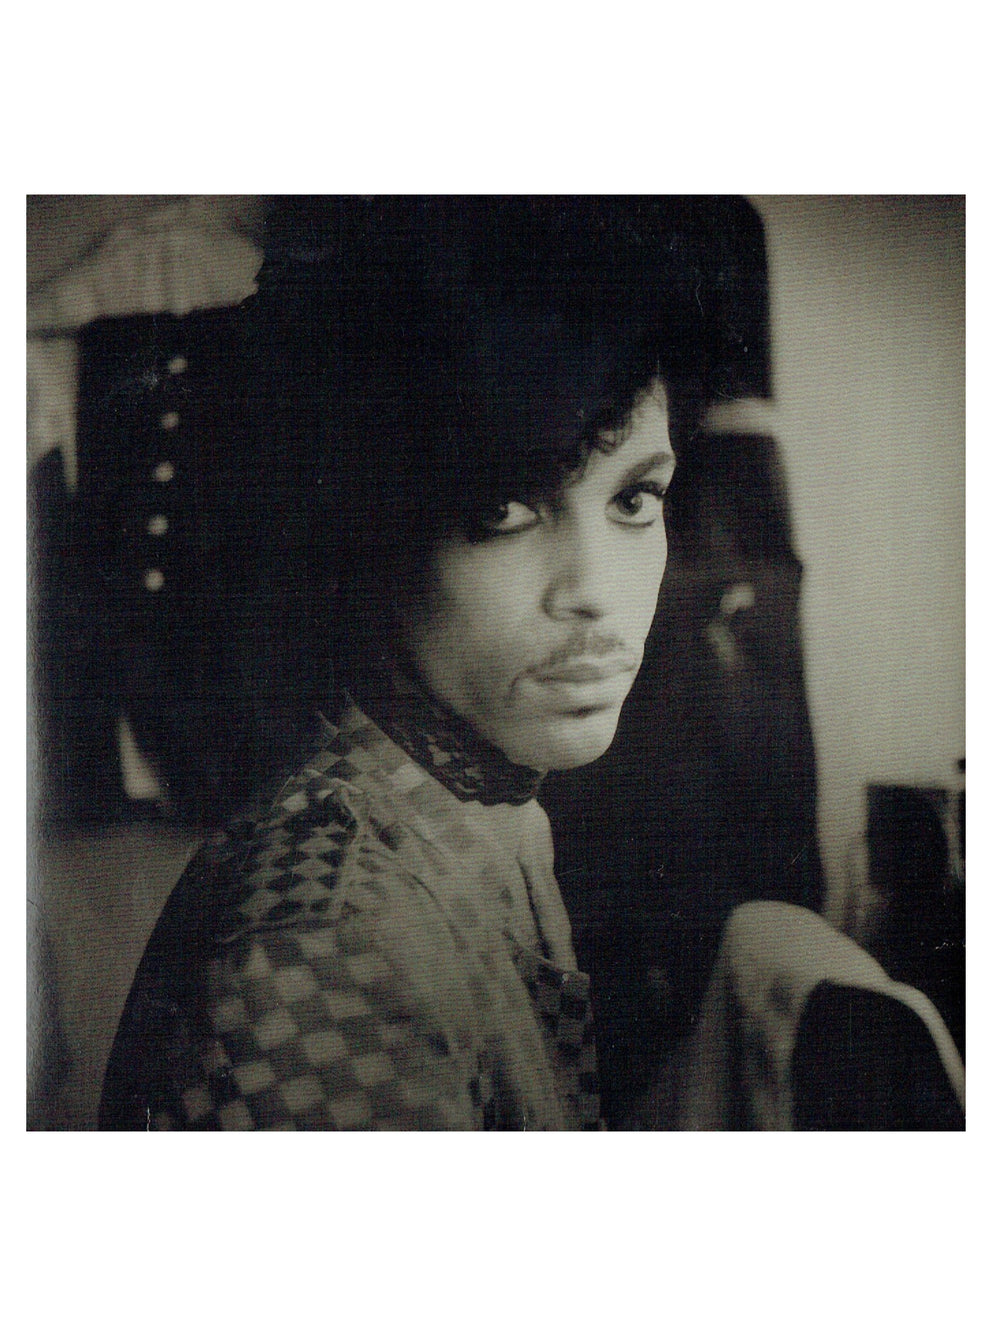 Prince – 17 Days Piano Version 1999 7 Inch Vinyl Single